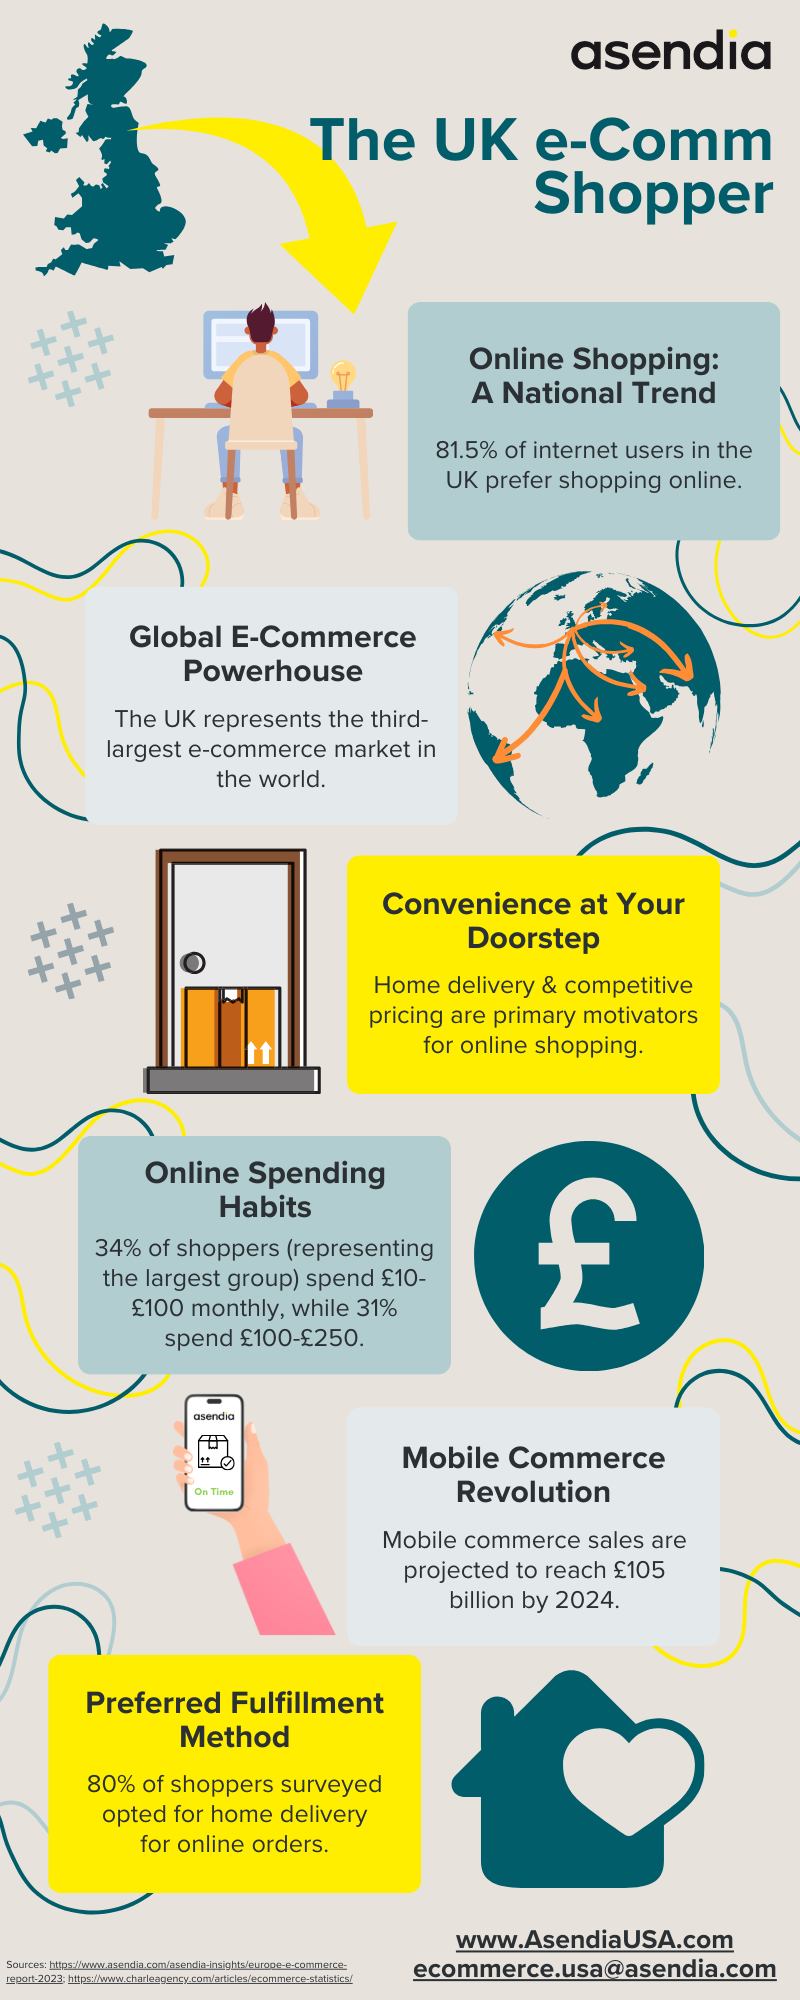 UK E-Comm Shopper - infographic